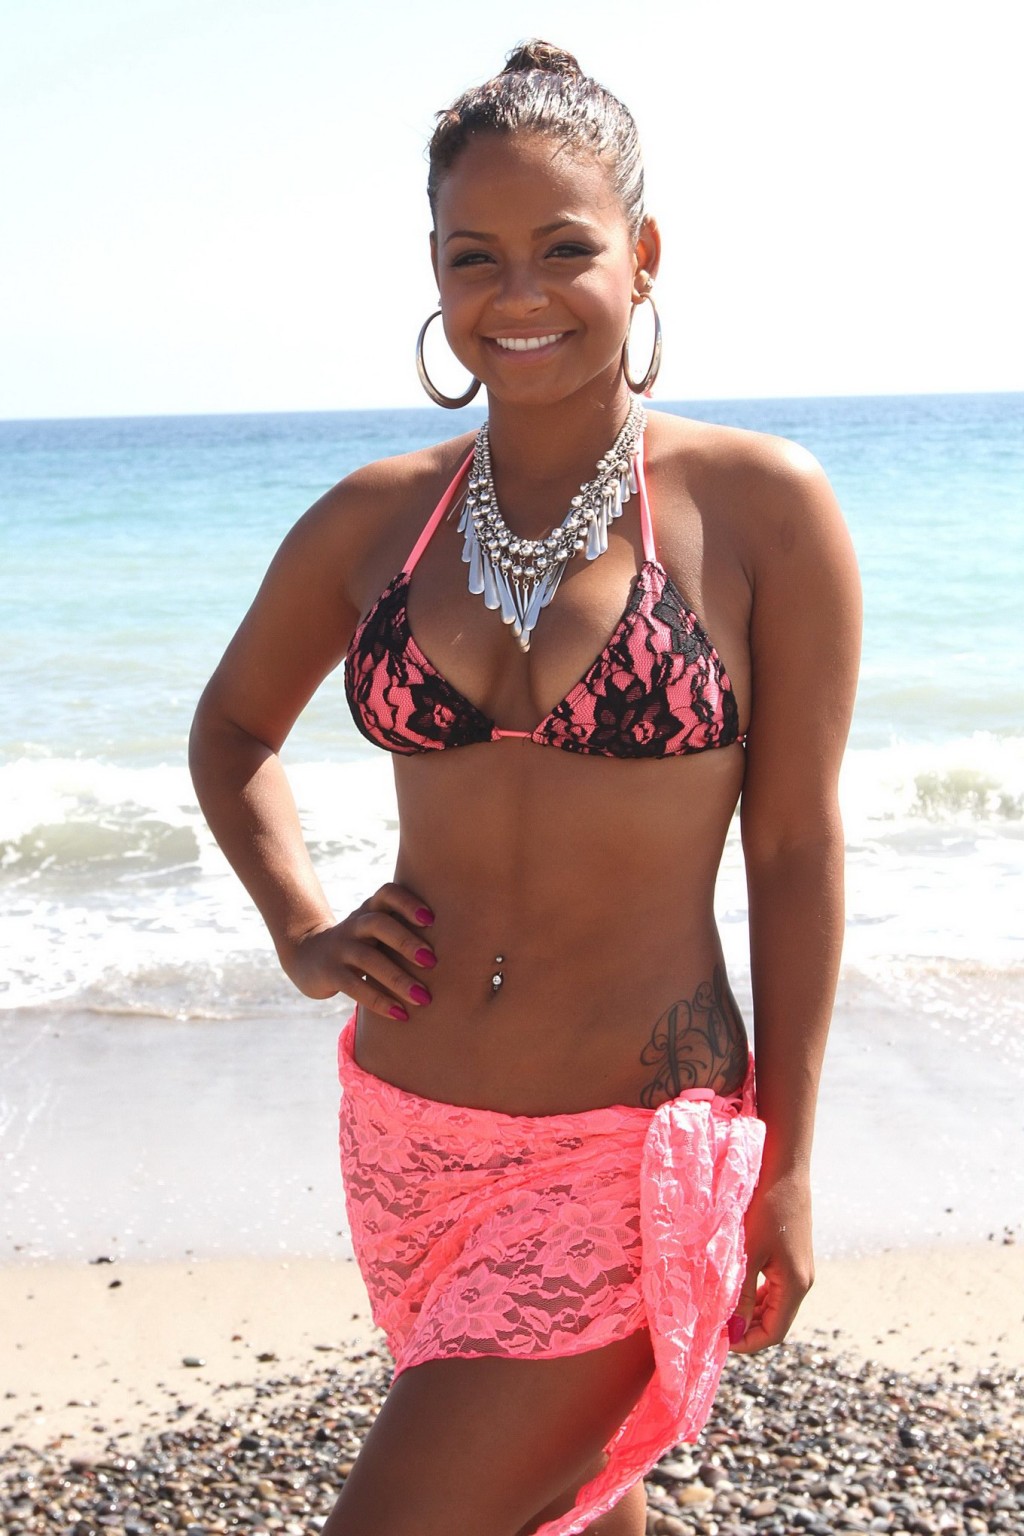 Christina milian mostrando su cuerpo en bikini en la playa de malibu
 #75290962